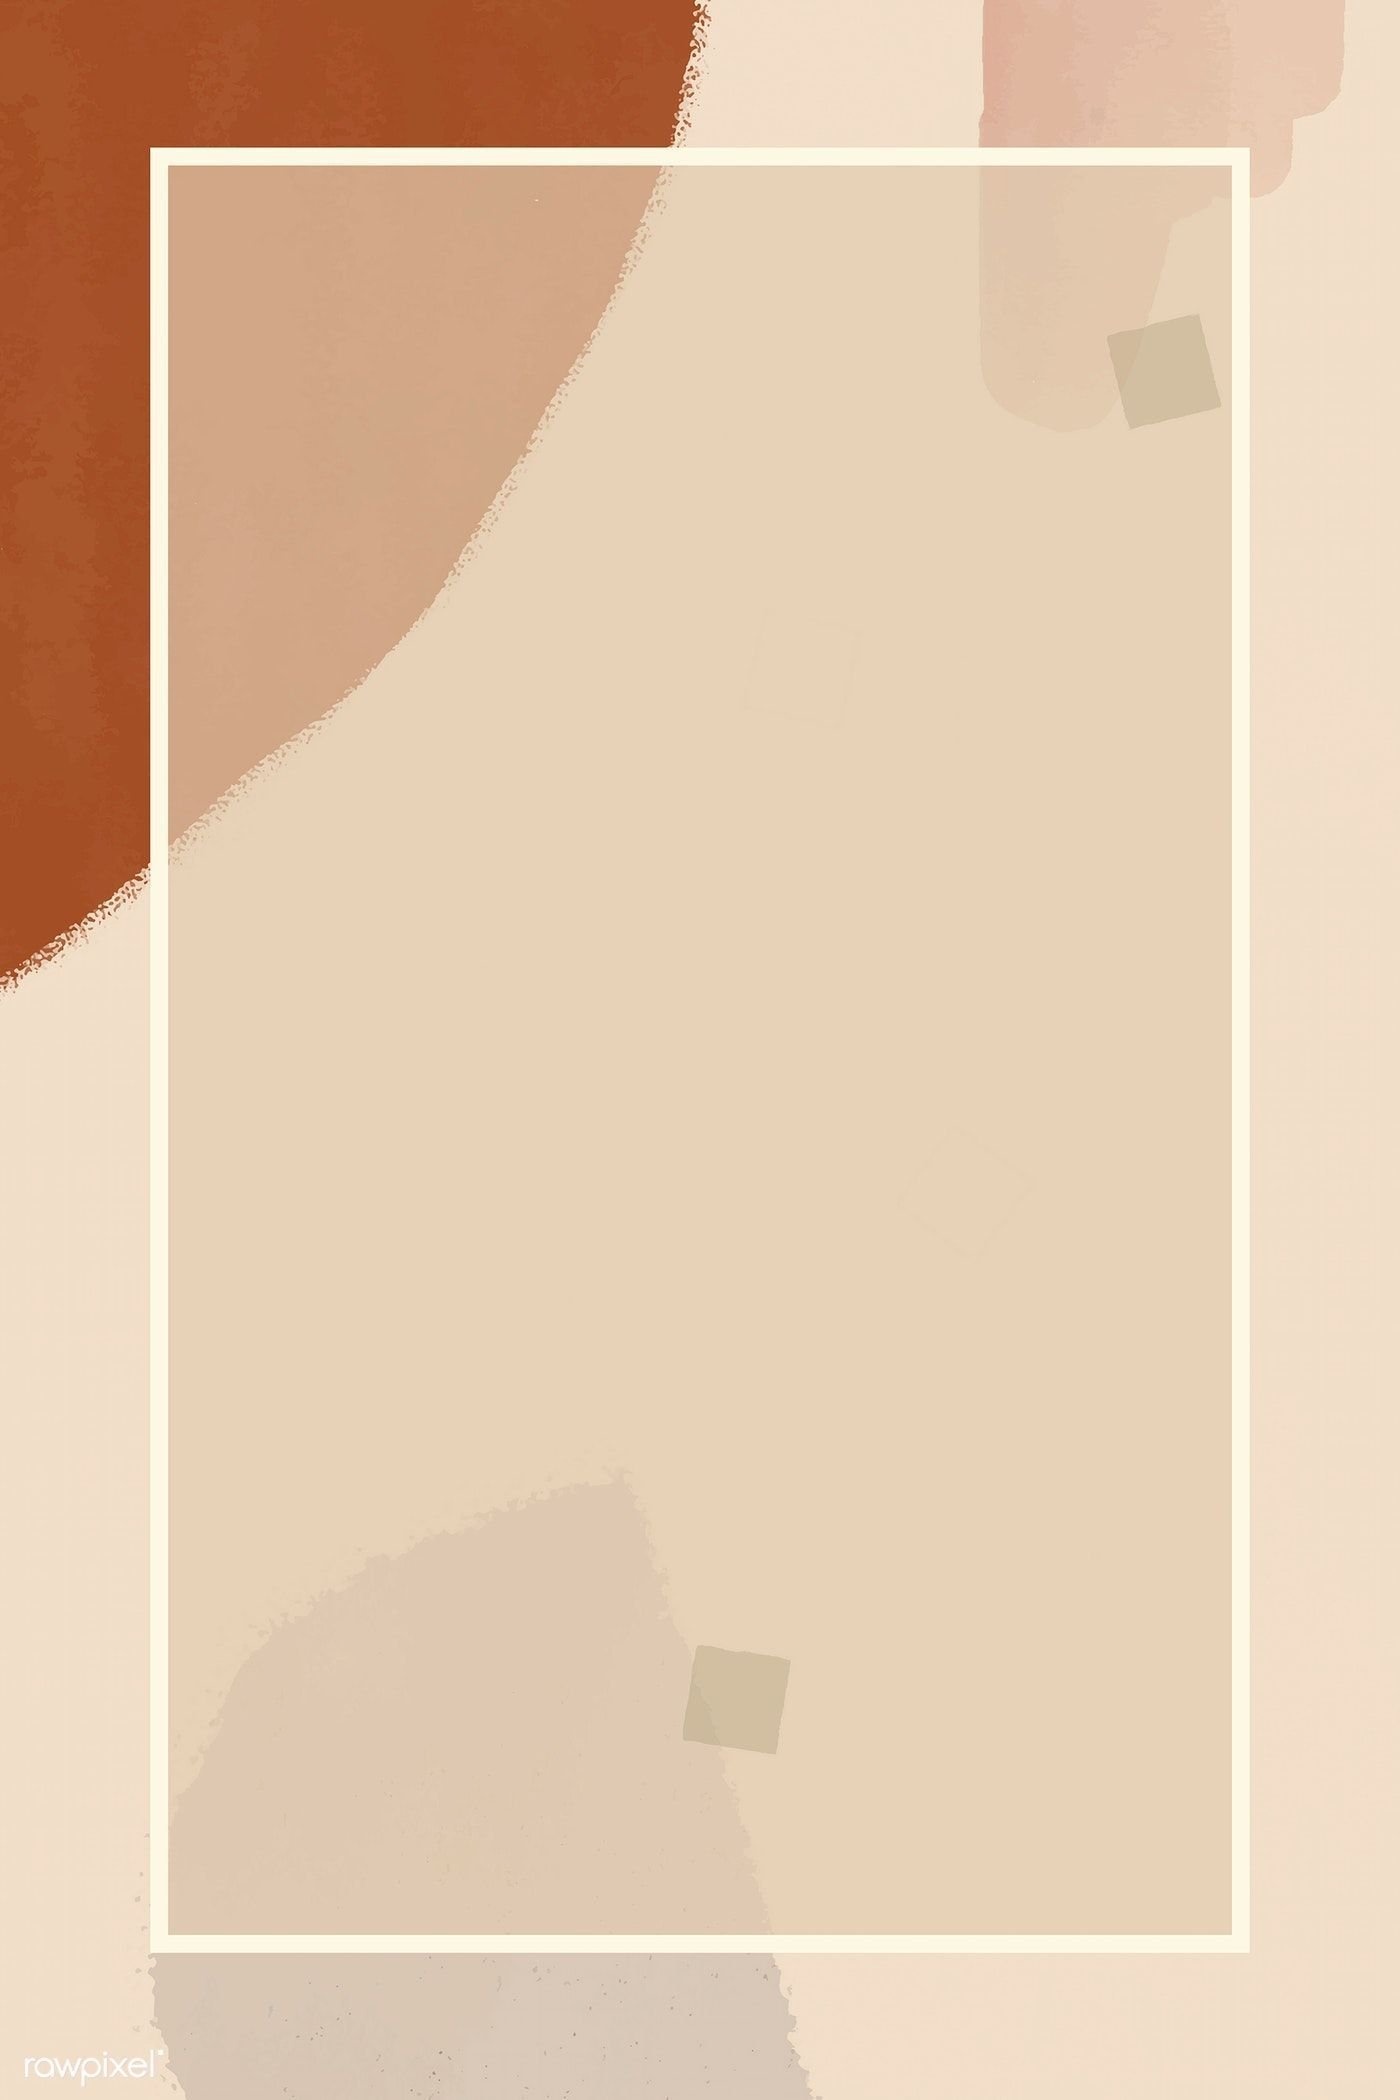 Aesthetic Background Brown Pastel di 2020. Bidang warna, Latar belakang, Gambar mode